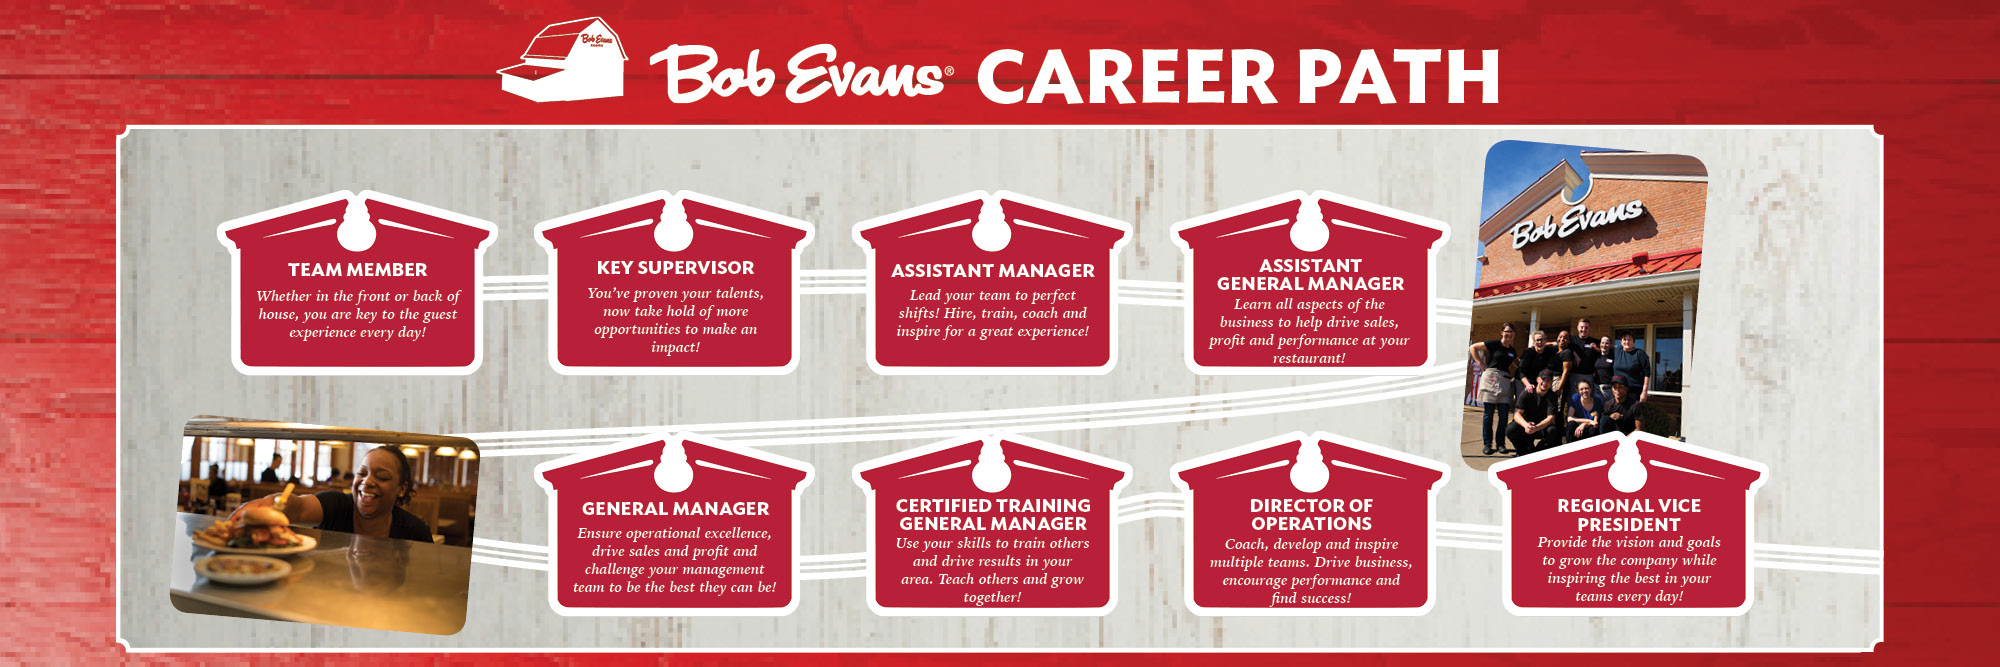 Bob Evans Career Path